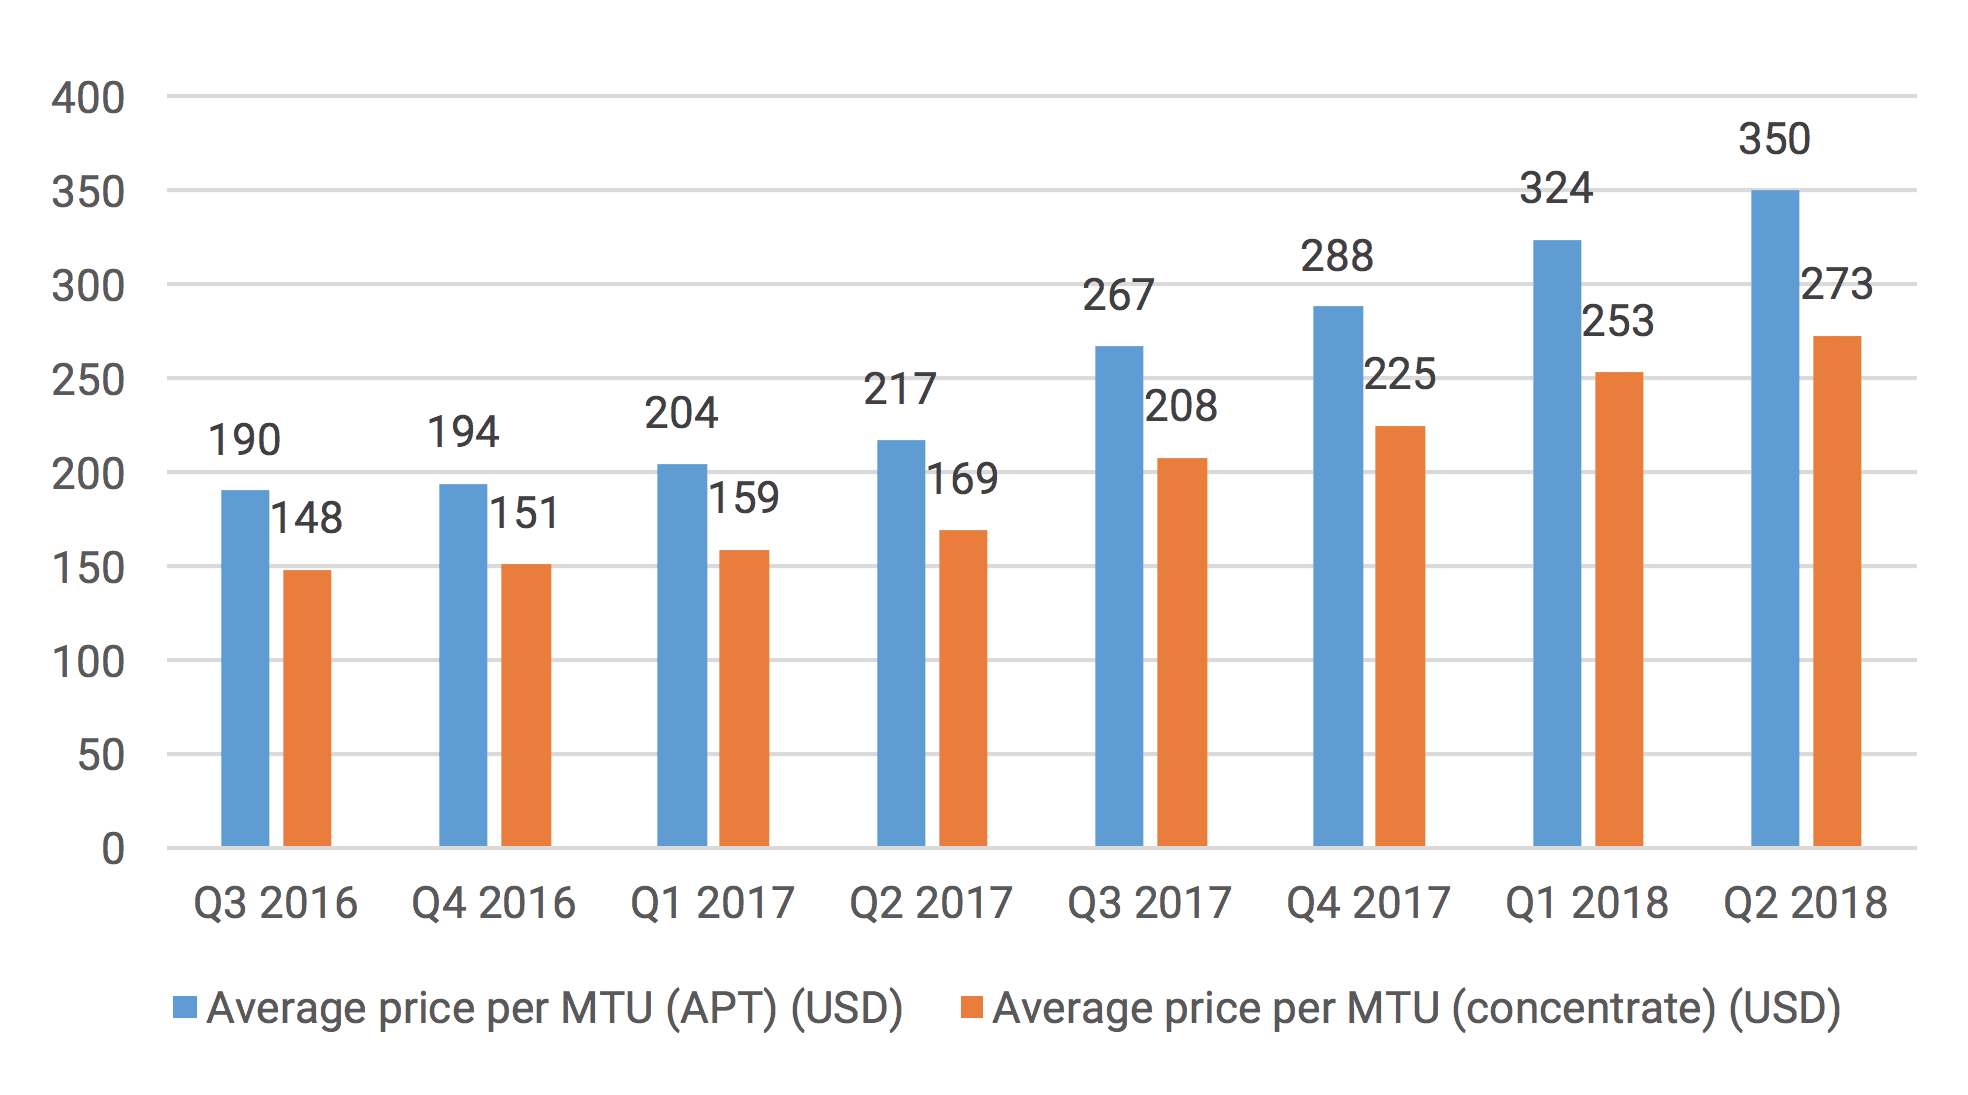 Average price per MTU